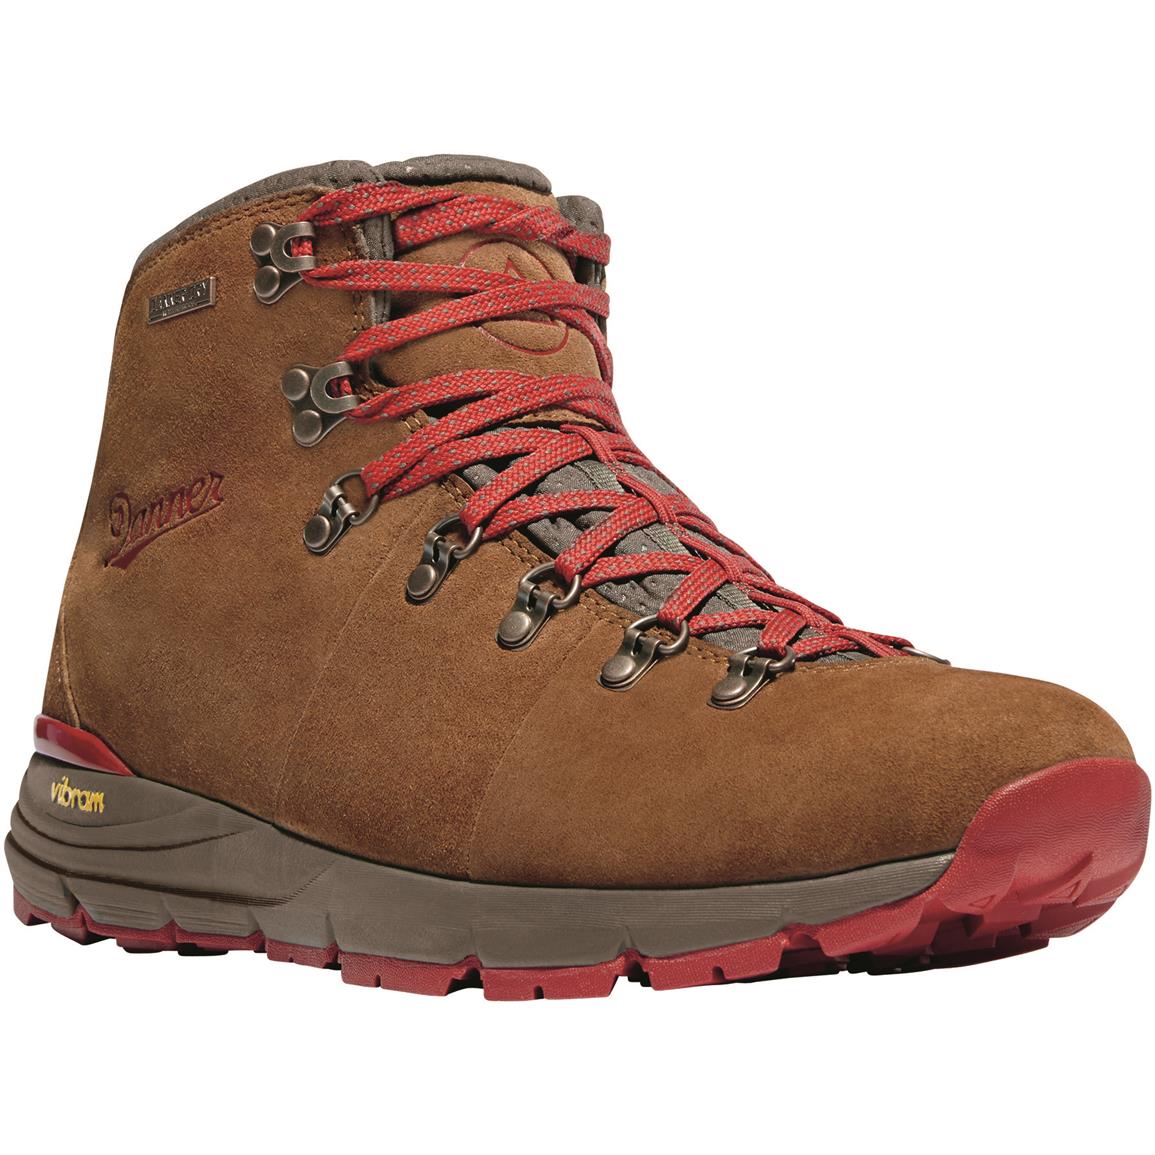 Danner Mountain 600 4.5" Women's Suede Waterproof Hiking Boots, Brown/Red